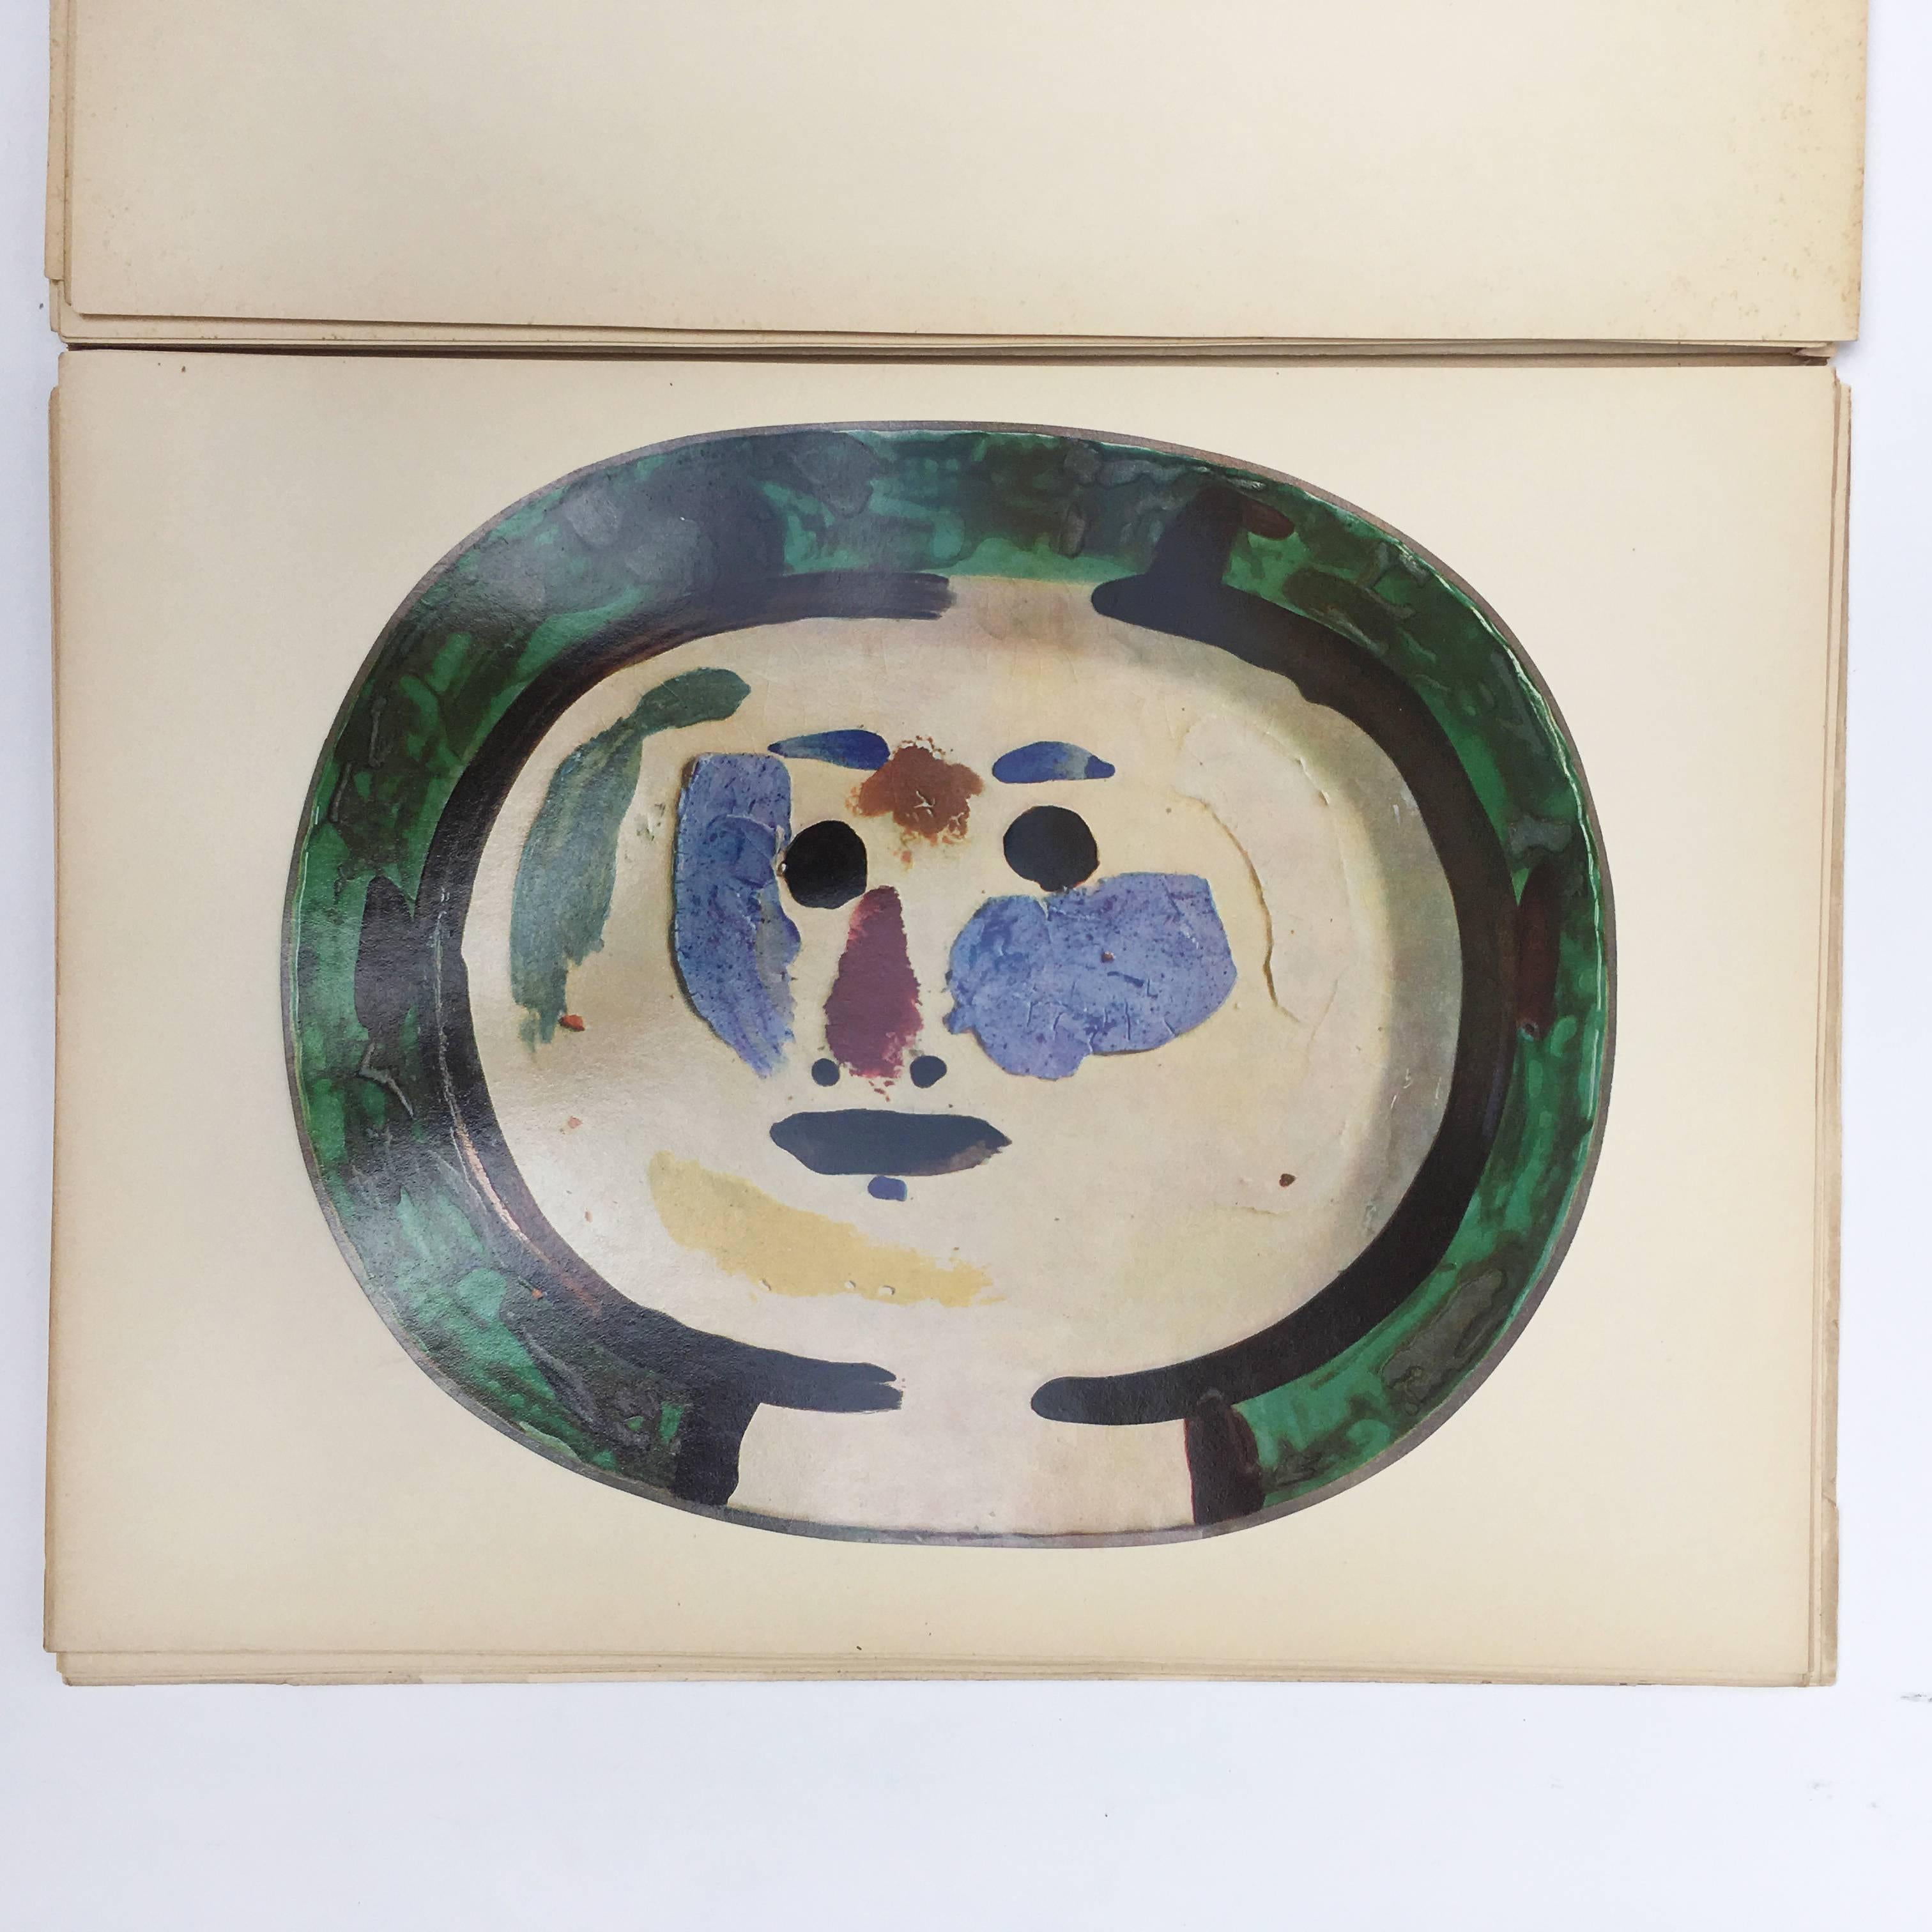 Swiss Picasso Ceramics, Book 1st English Language Edition, 1950